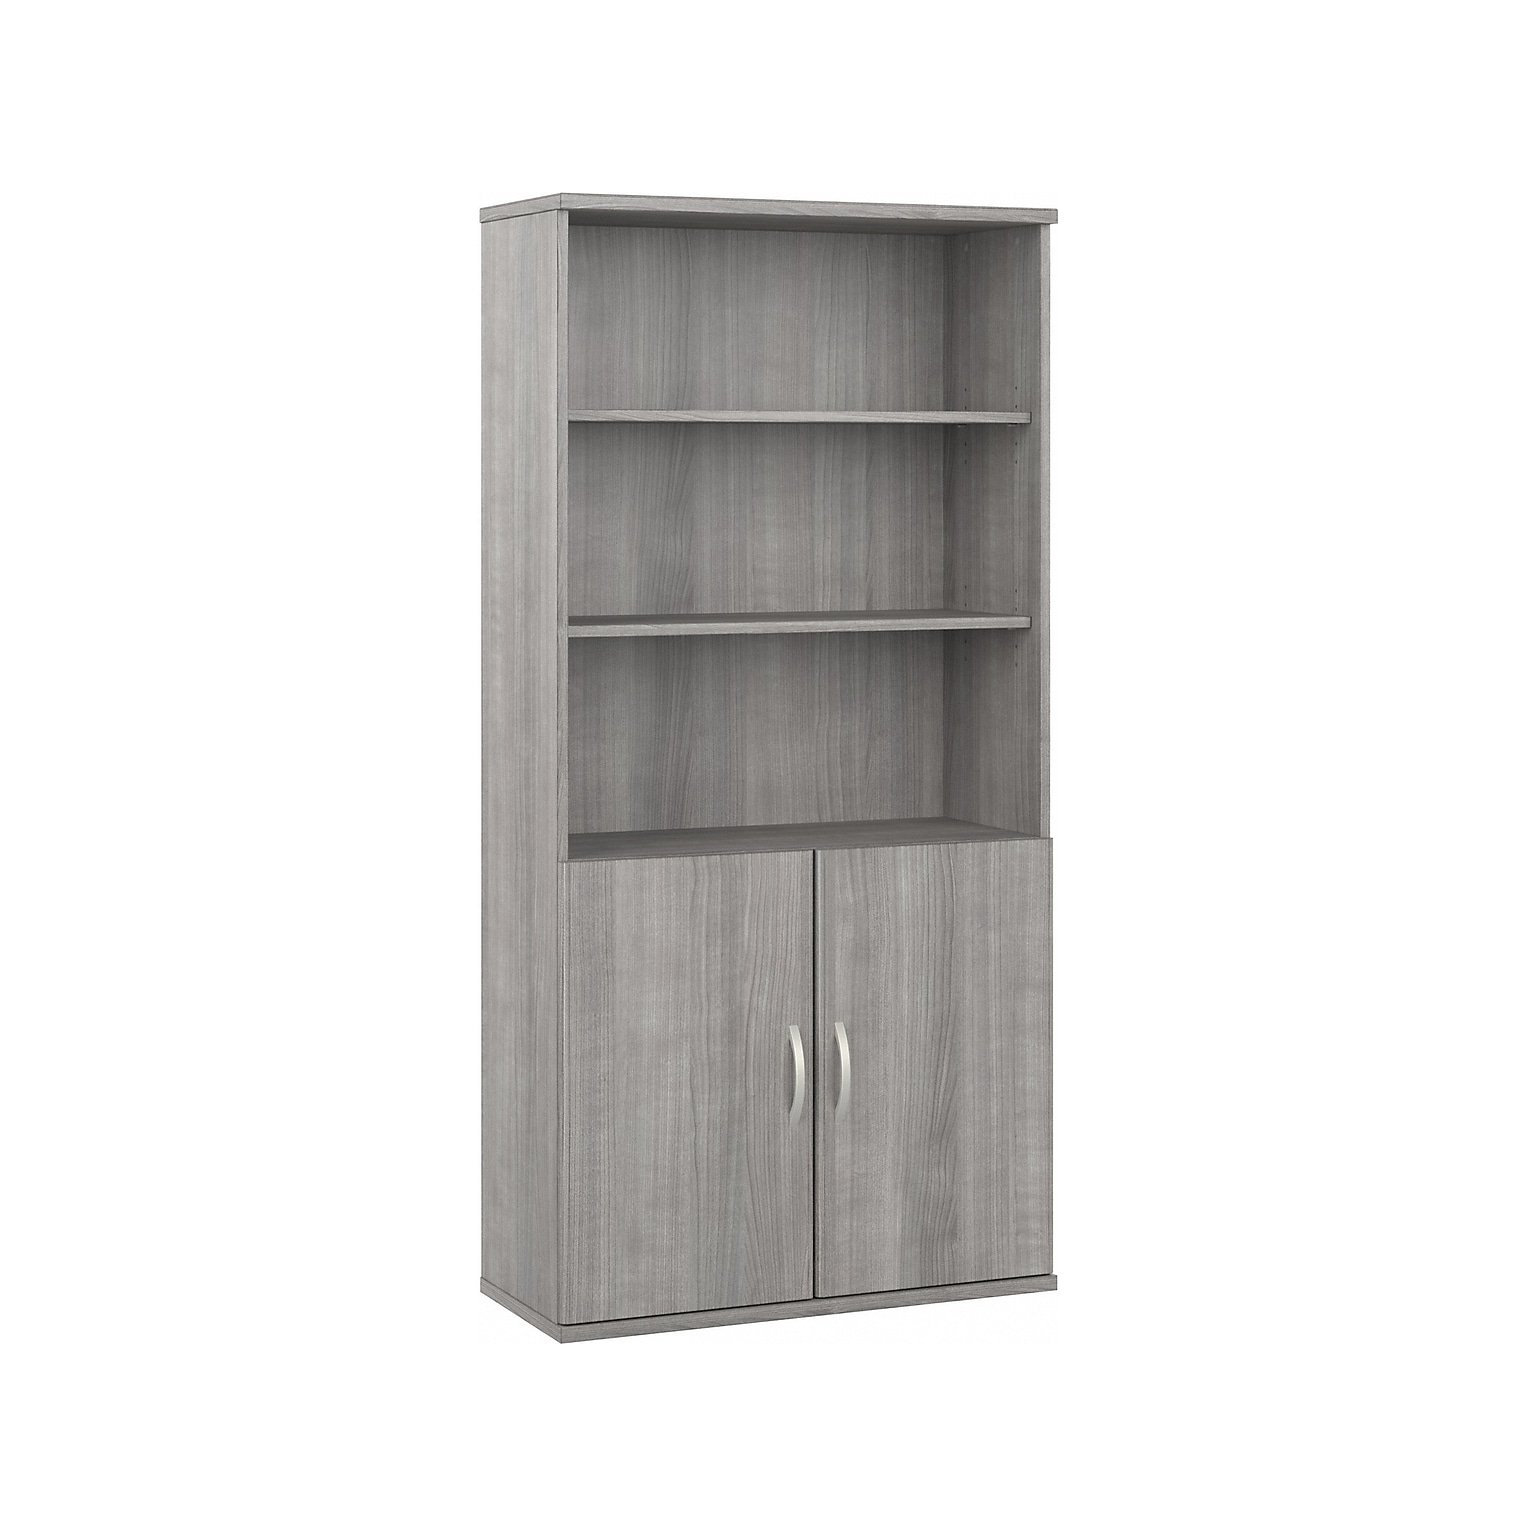 Bush Business Furniture Hybrid 73H 5-Shelf Bookcase with Doors, Platinum Gray Laminated Wood (HYB024PG)